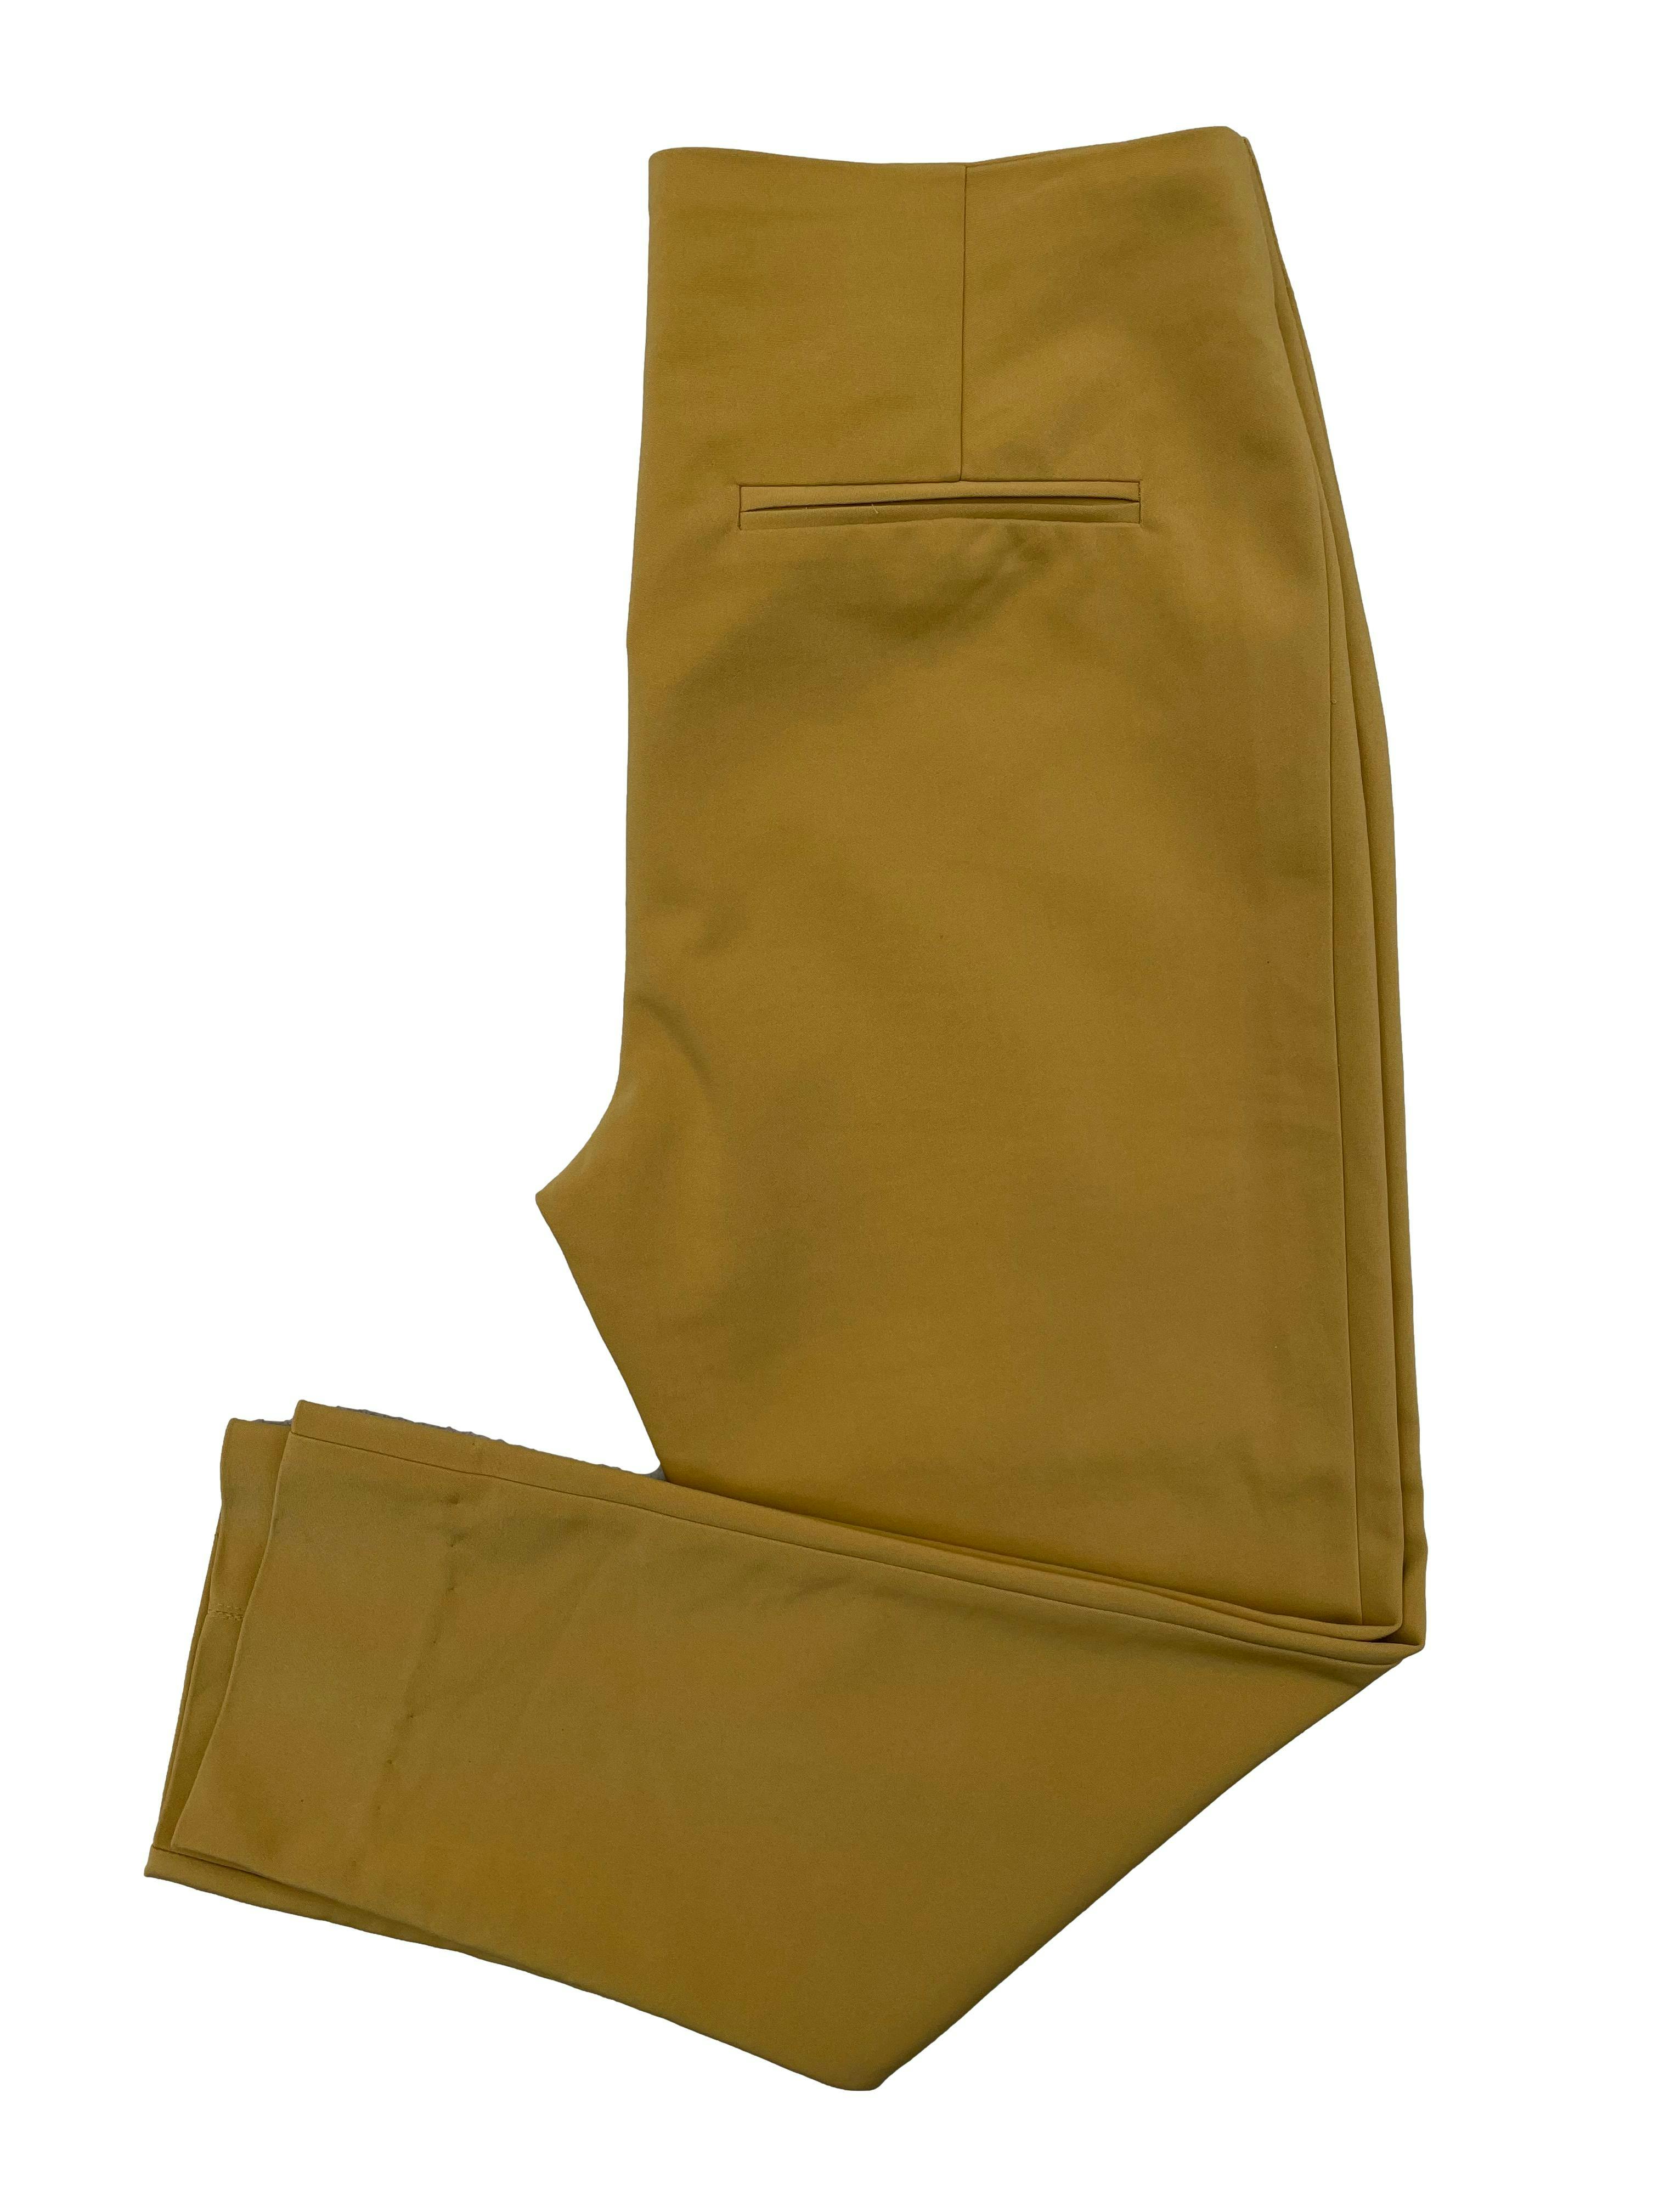 Pantalón Basement mostaza de corte recto, falsos bolsillos con cierre. Cintura 78cm, Tiro 24cm, Largo 82cm.